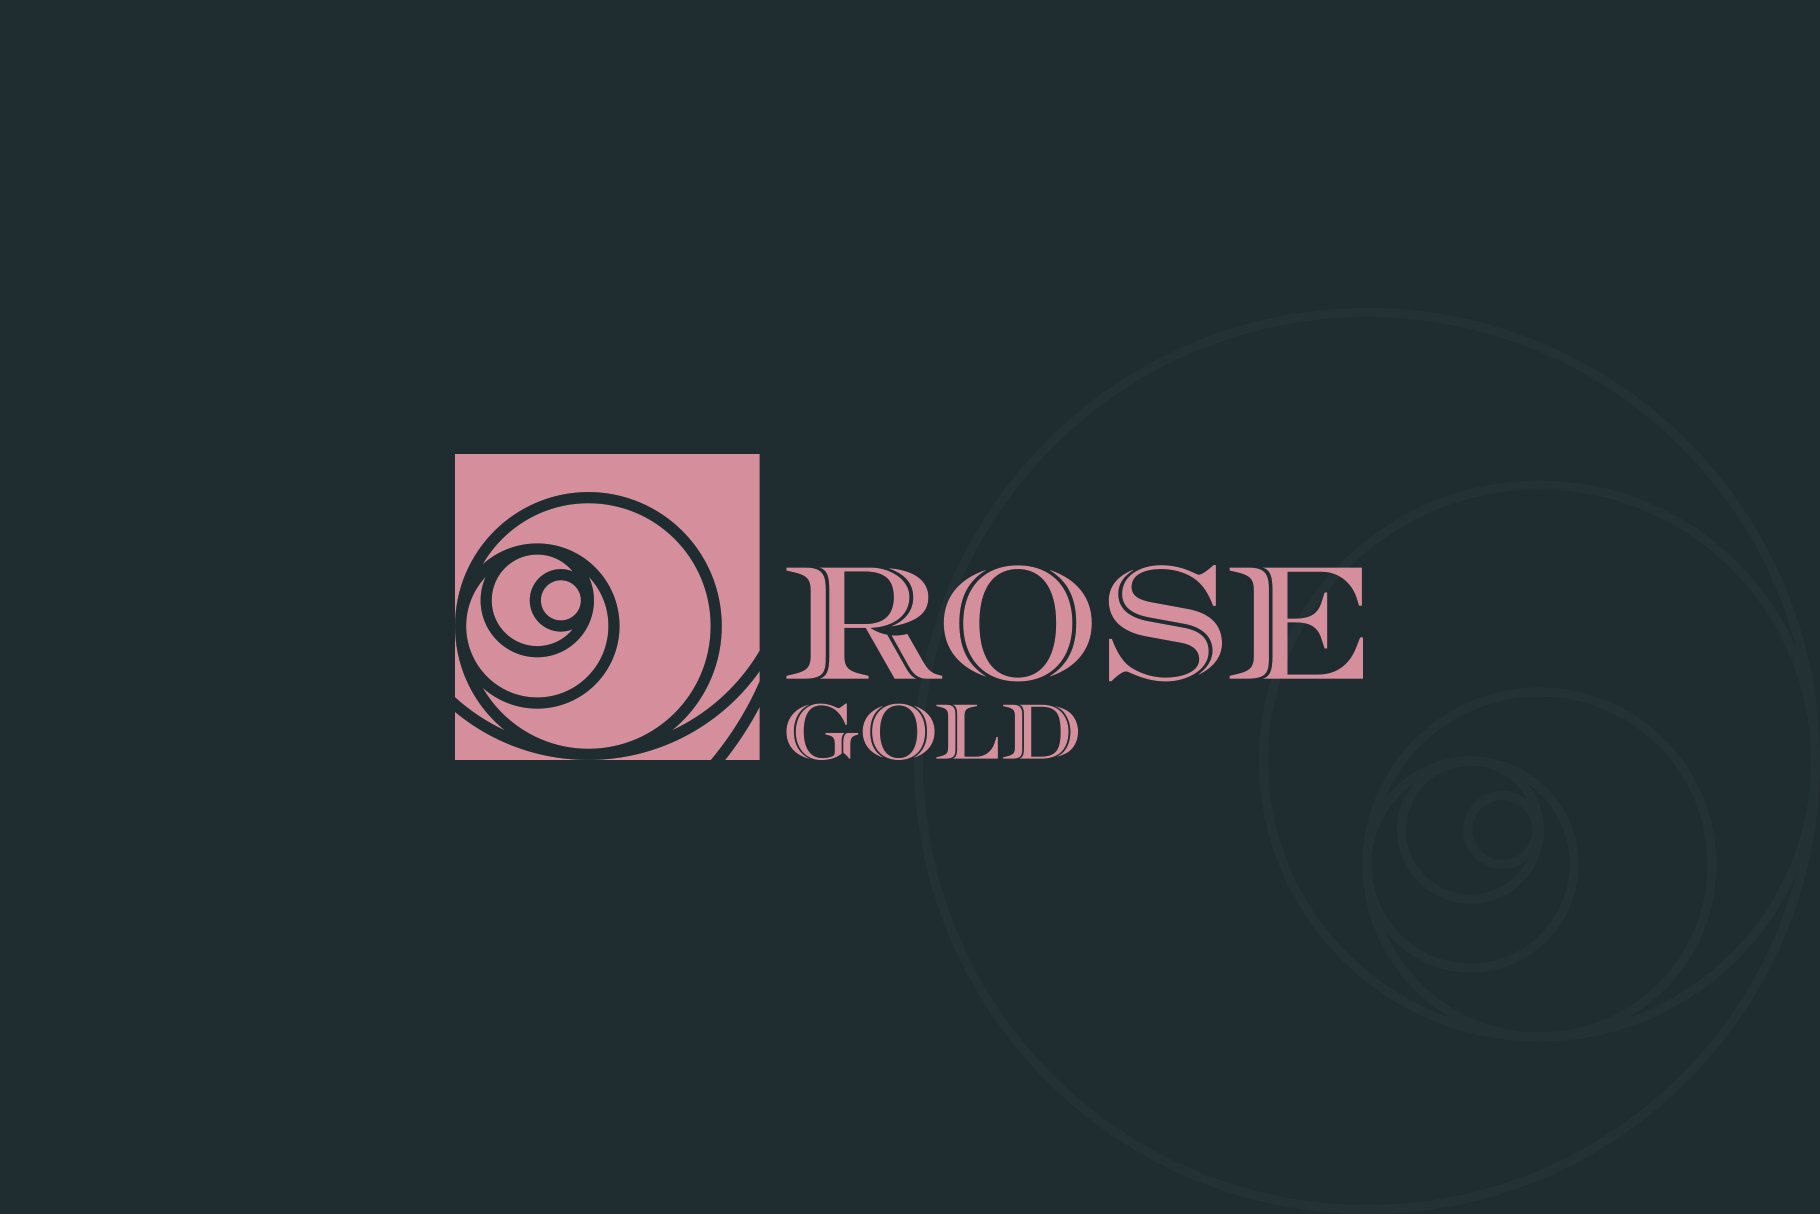 Rose Gold Logo cover image.